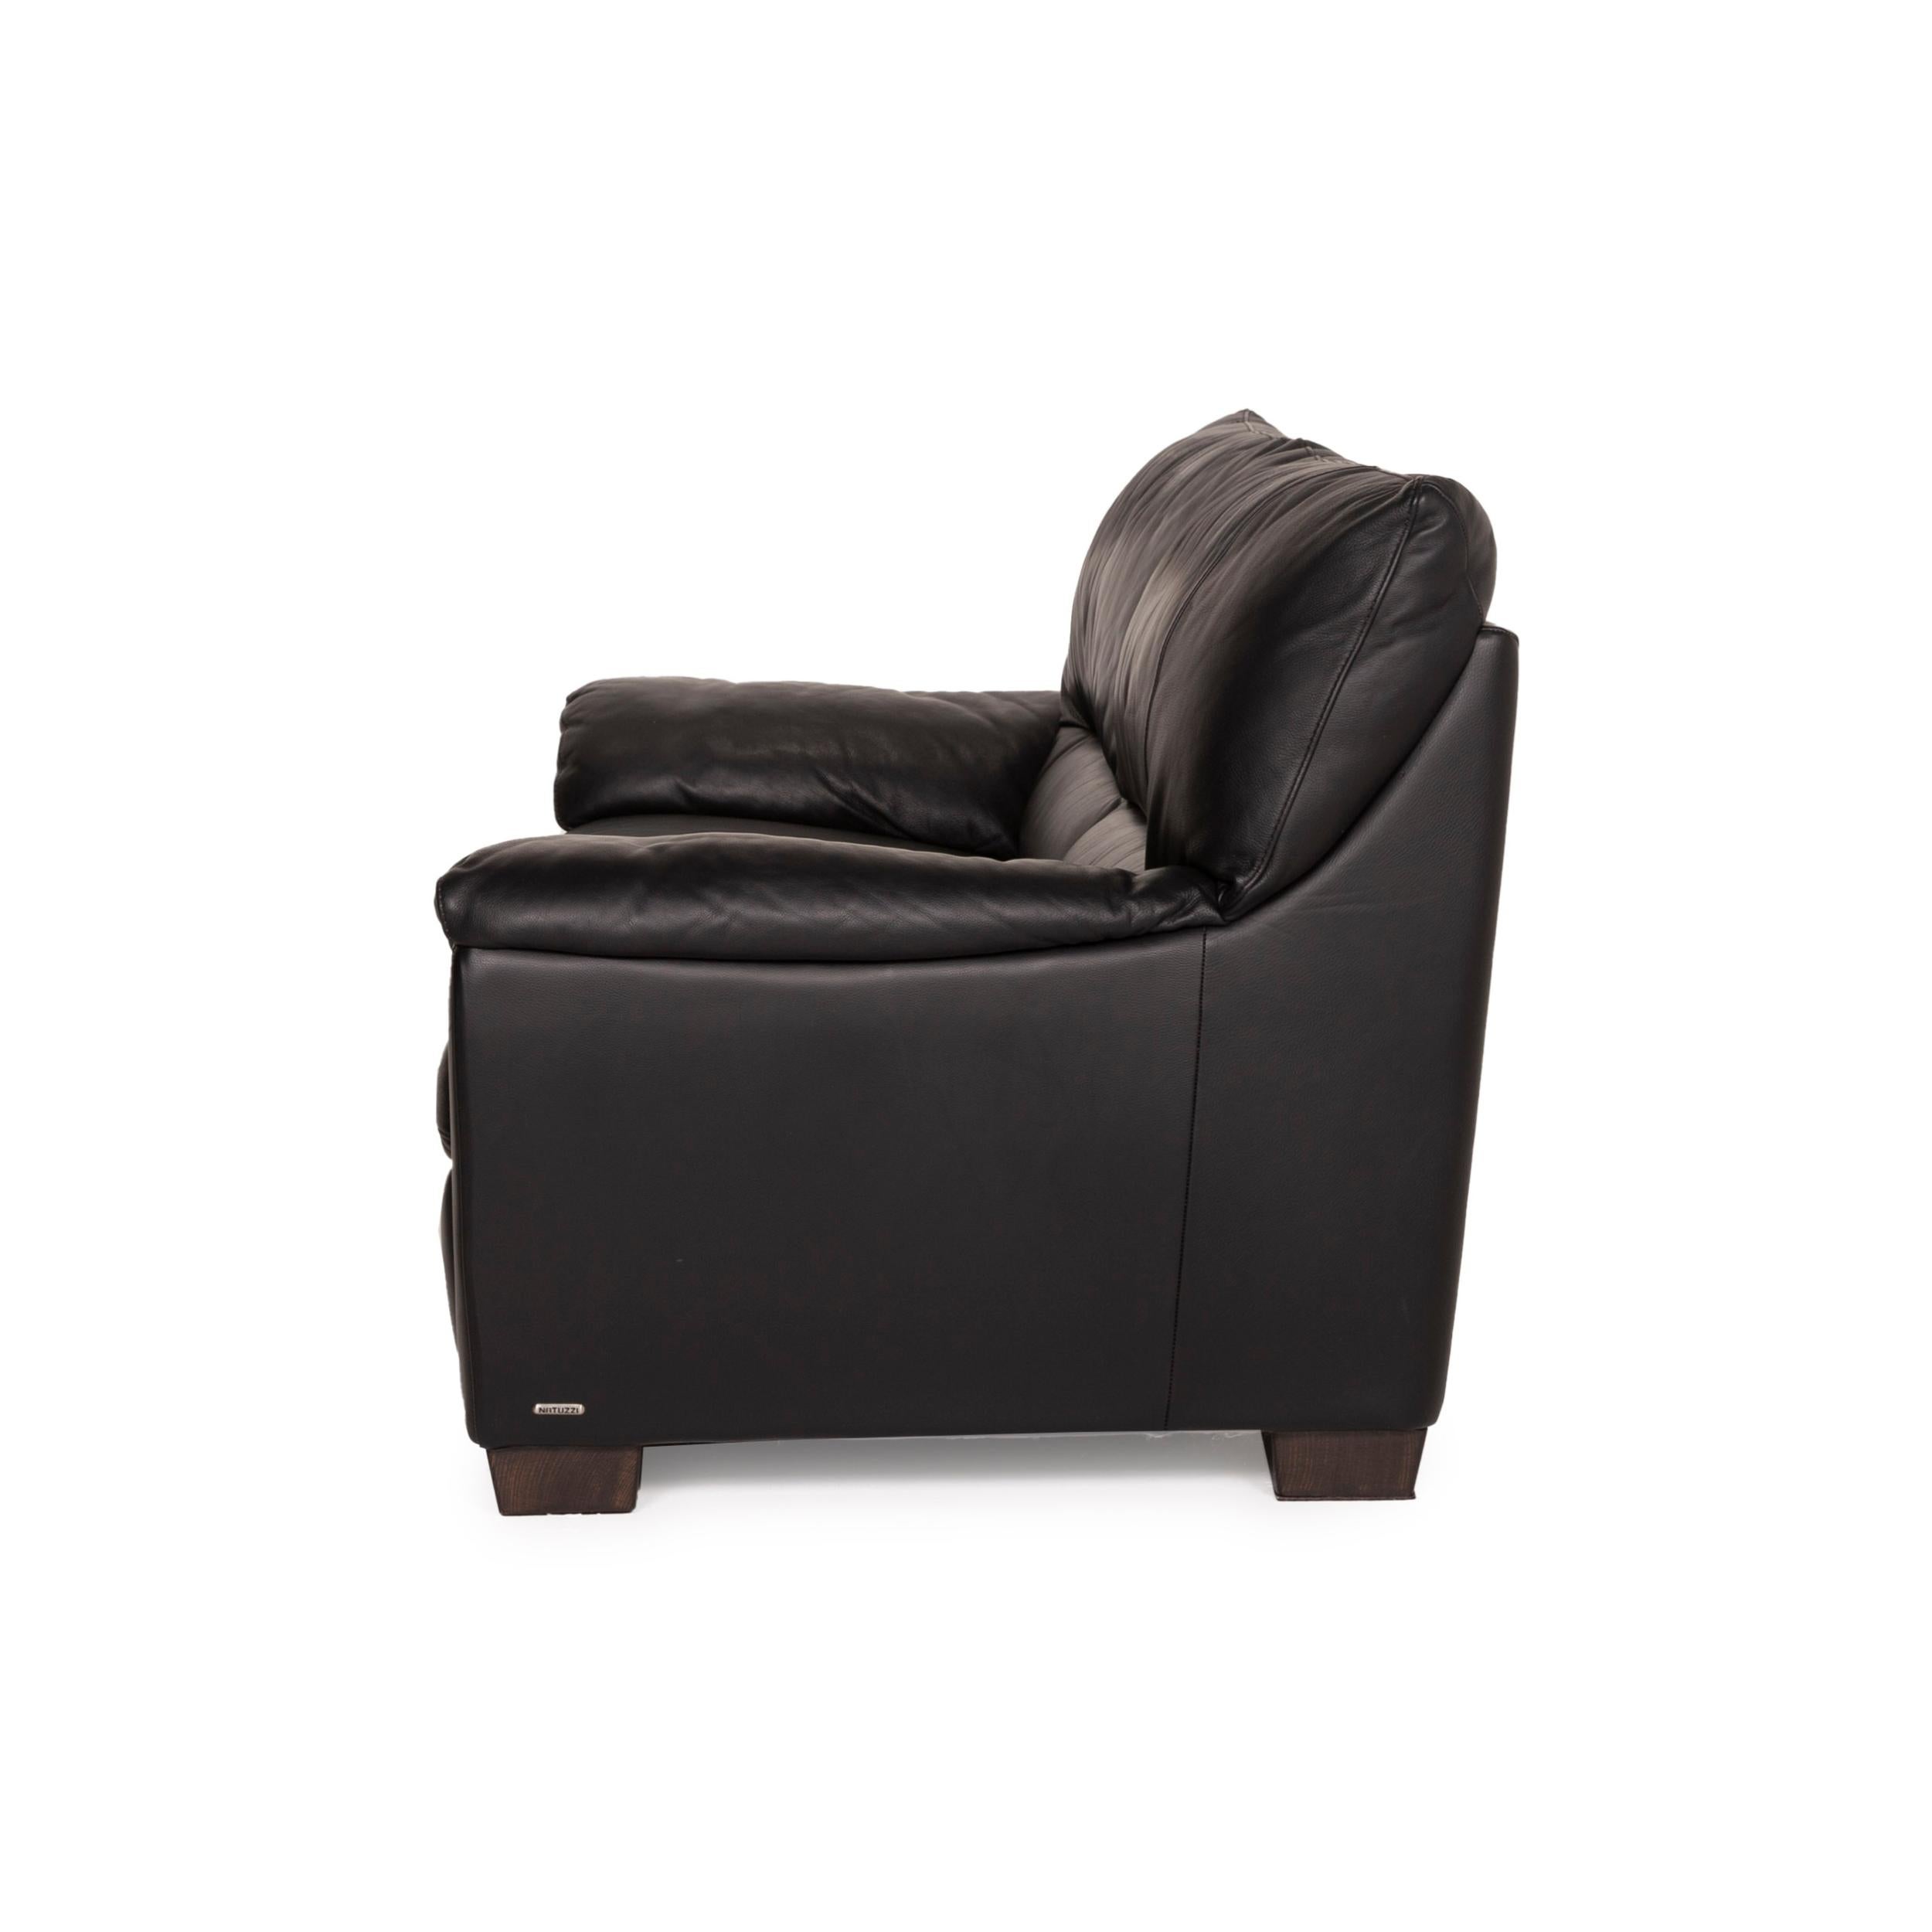 Natuzzi Two-Seater Leather Sofa Set Black 2x Two-Seater 4